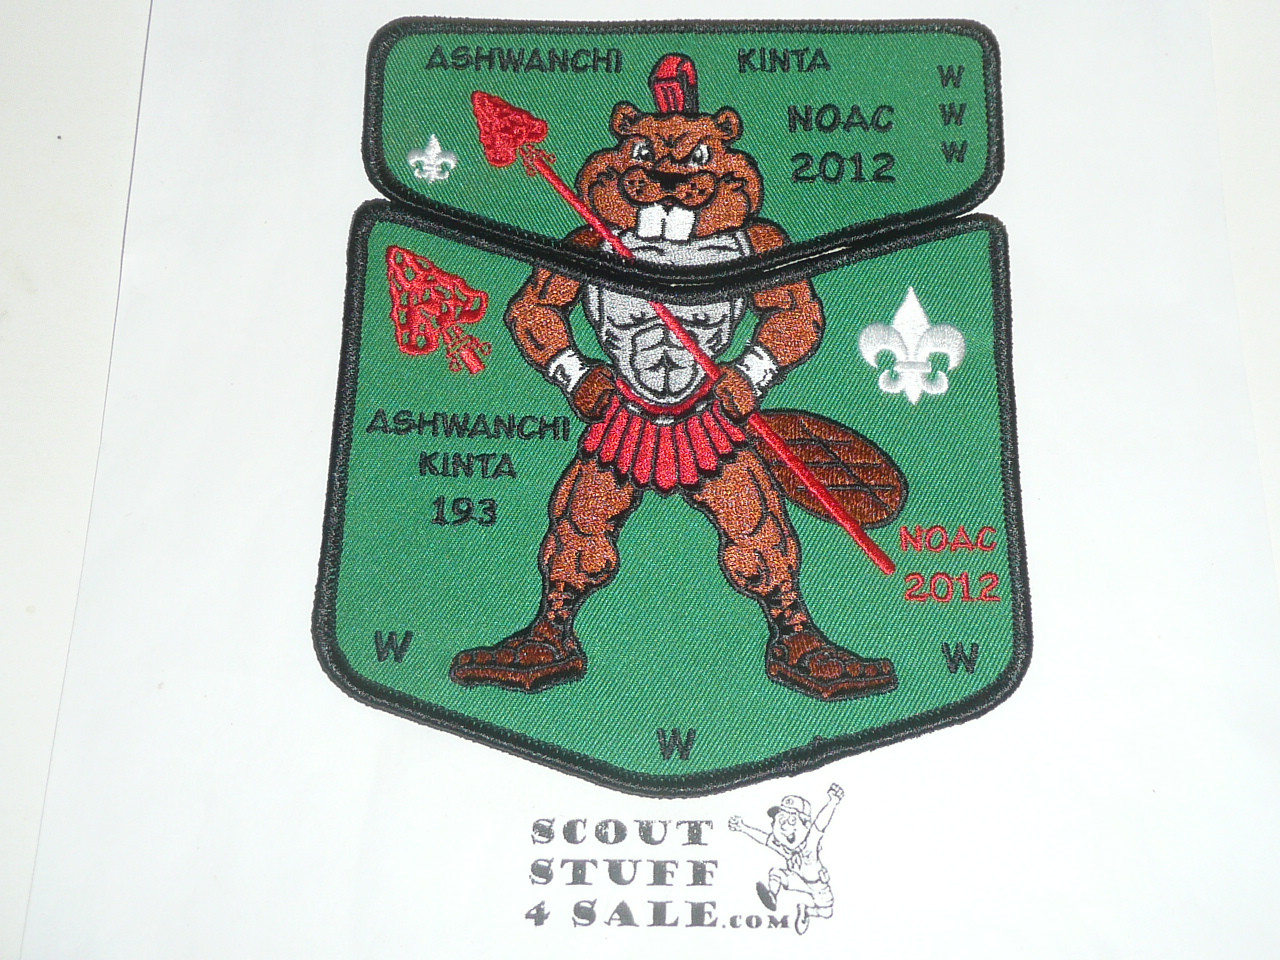 Order of the Arrow Lodge #193 Ashwanchi Kinta 2012 NOAC Flap Patch